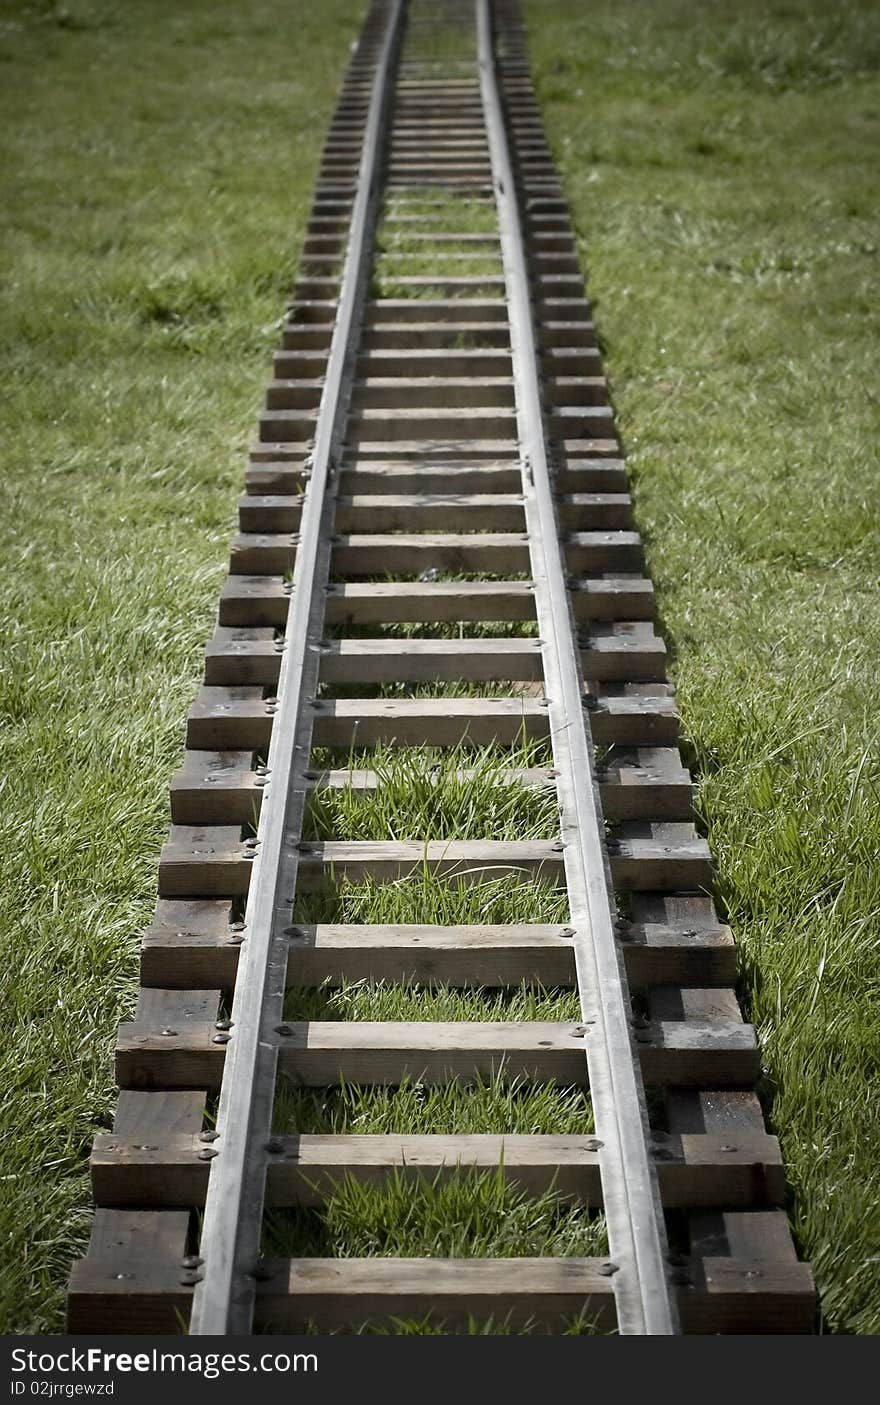 Narrow gauge model railroad track. Narrow gauge model railroad track